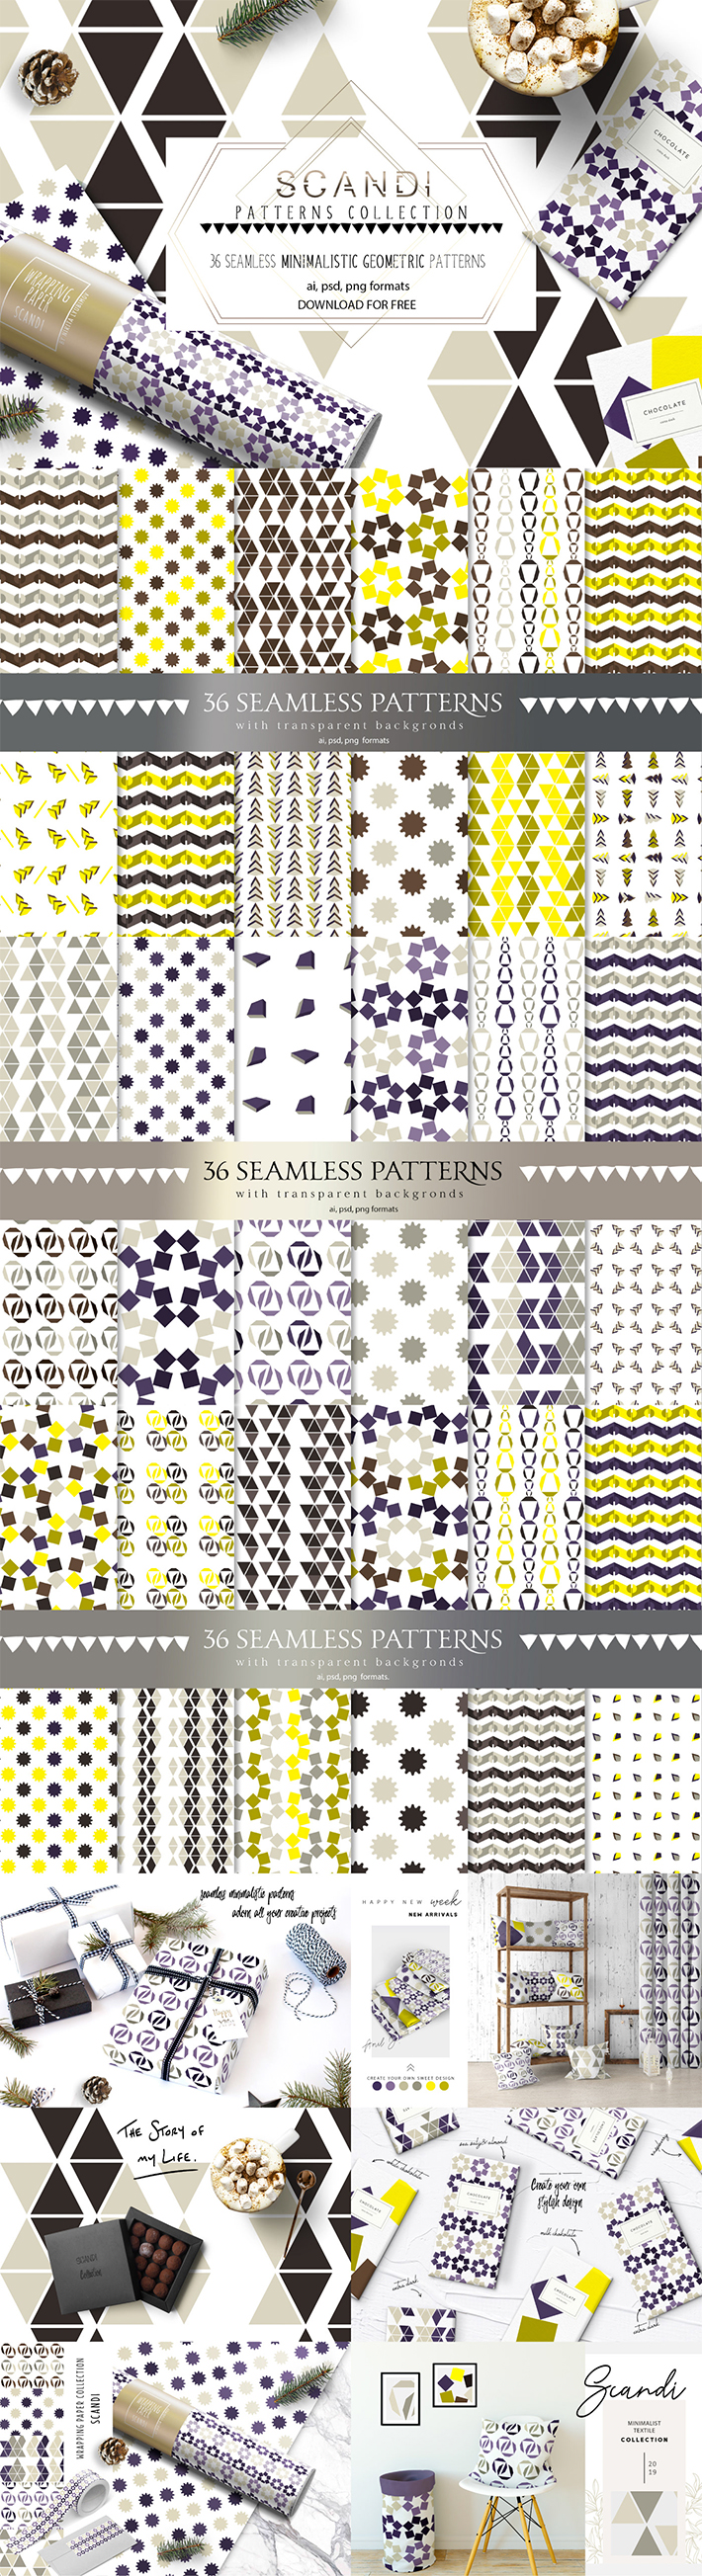 Free Download 36 Scandi Seamless Geometric Patterns For Designers